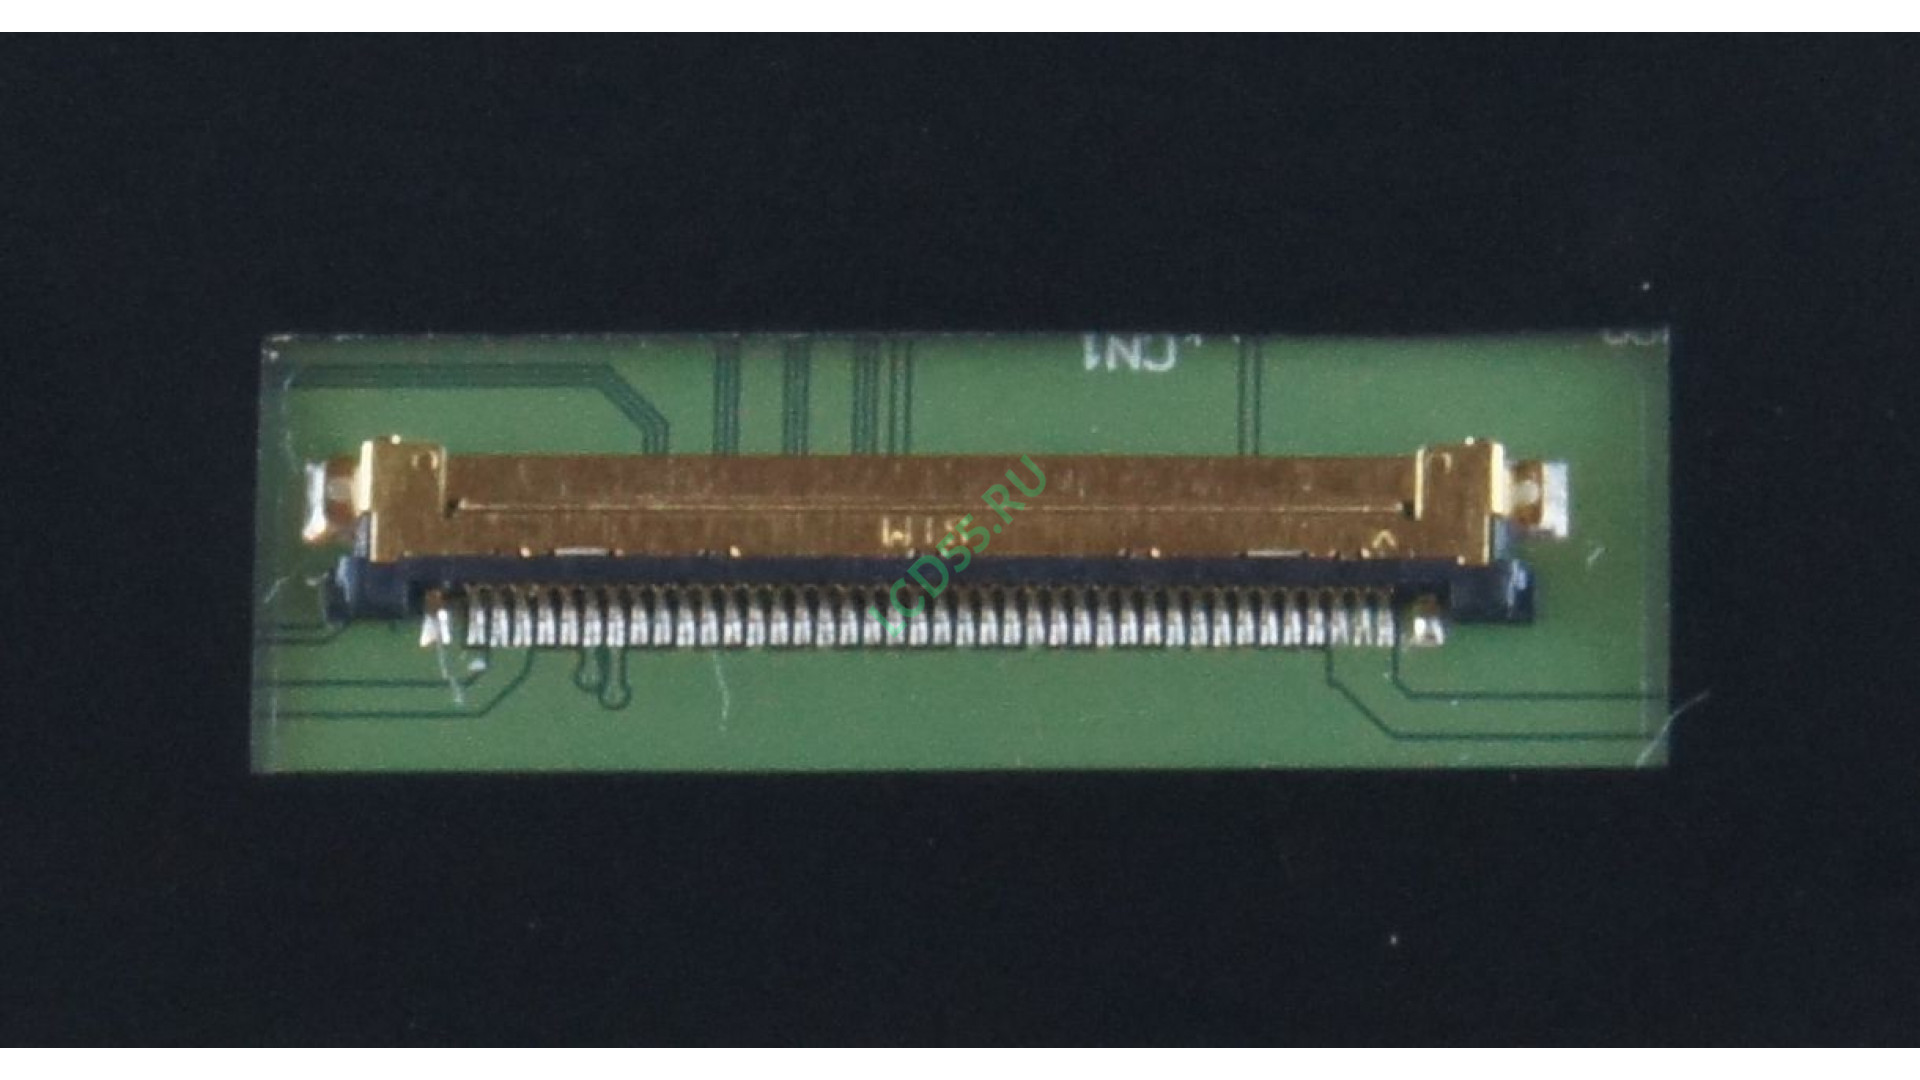 15.6" NT156WHM-N50 WXGA 1366x768 LED (40 pin left) Glossy